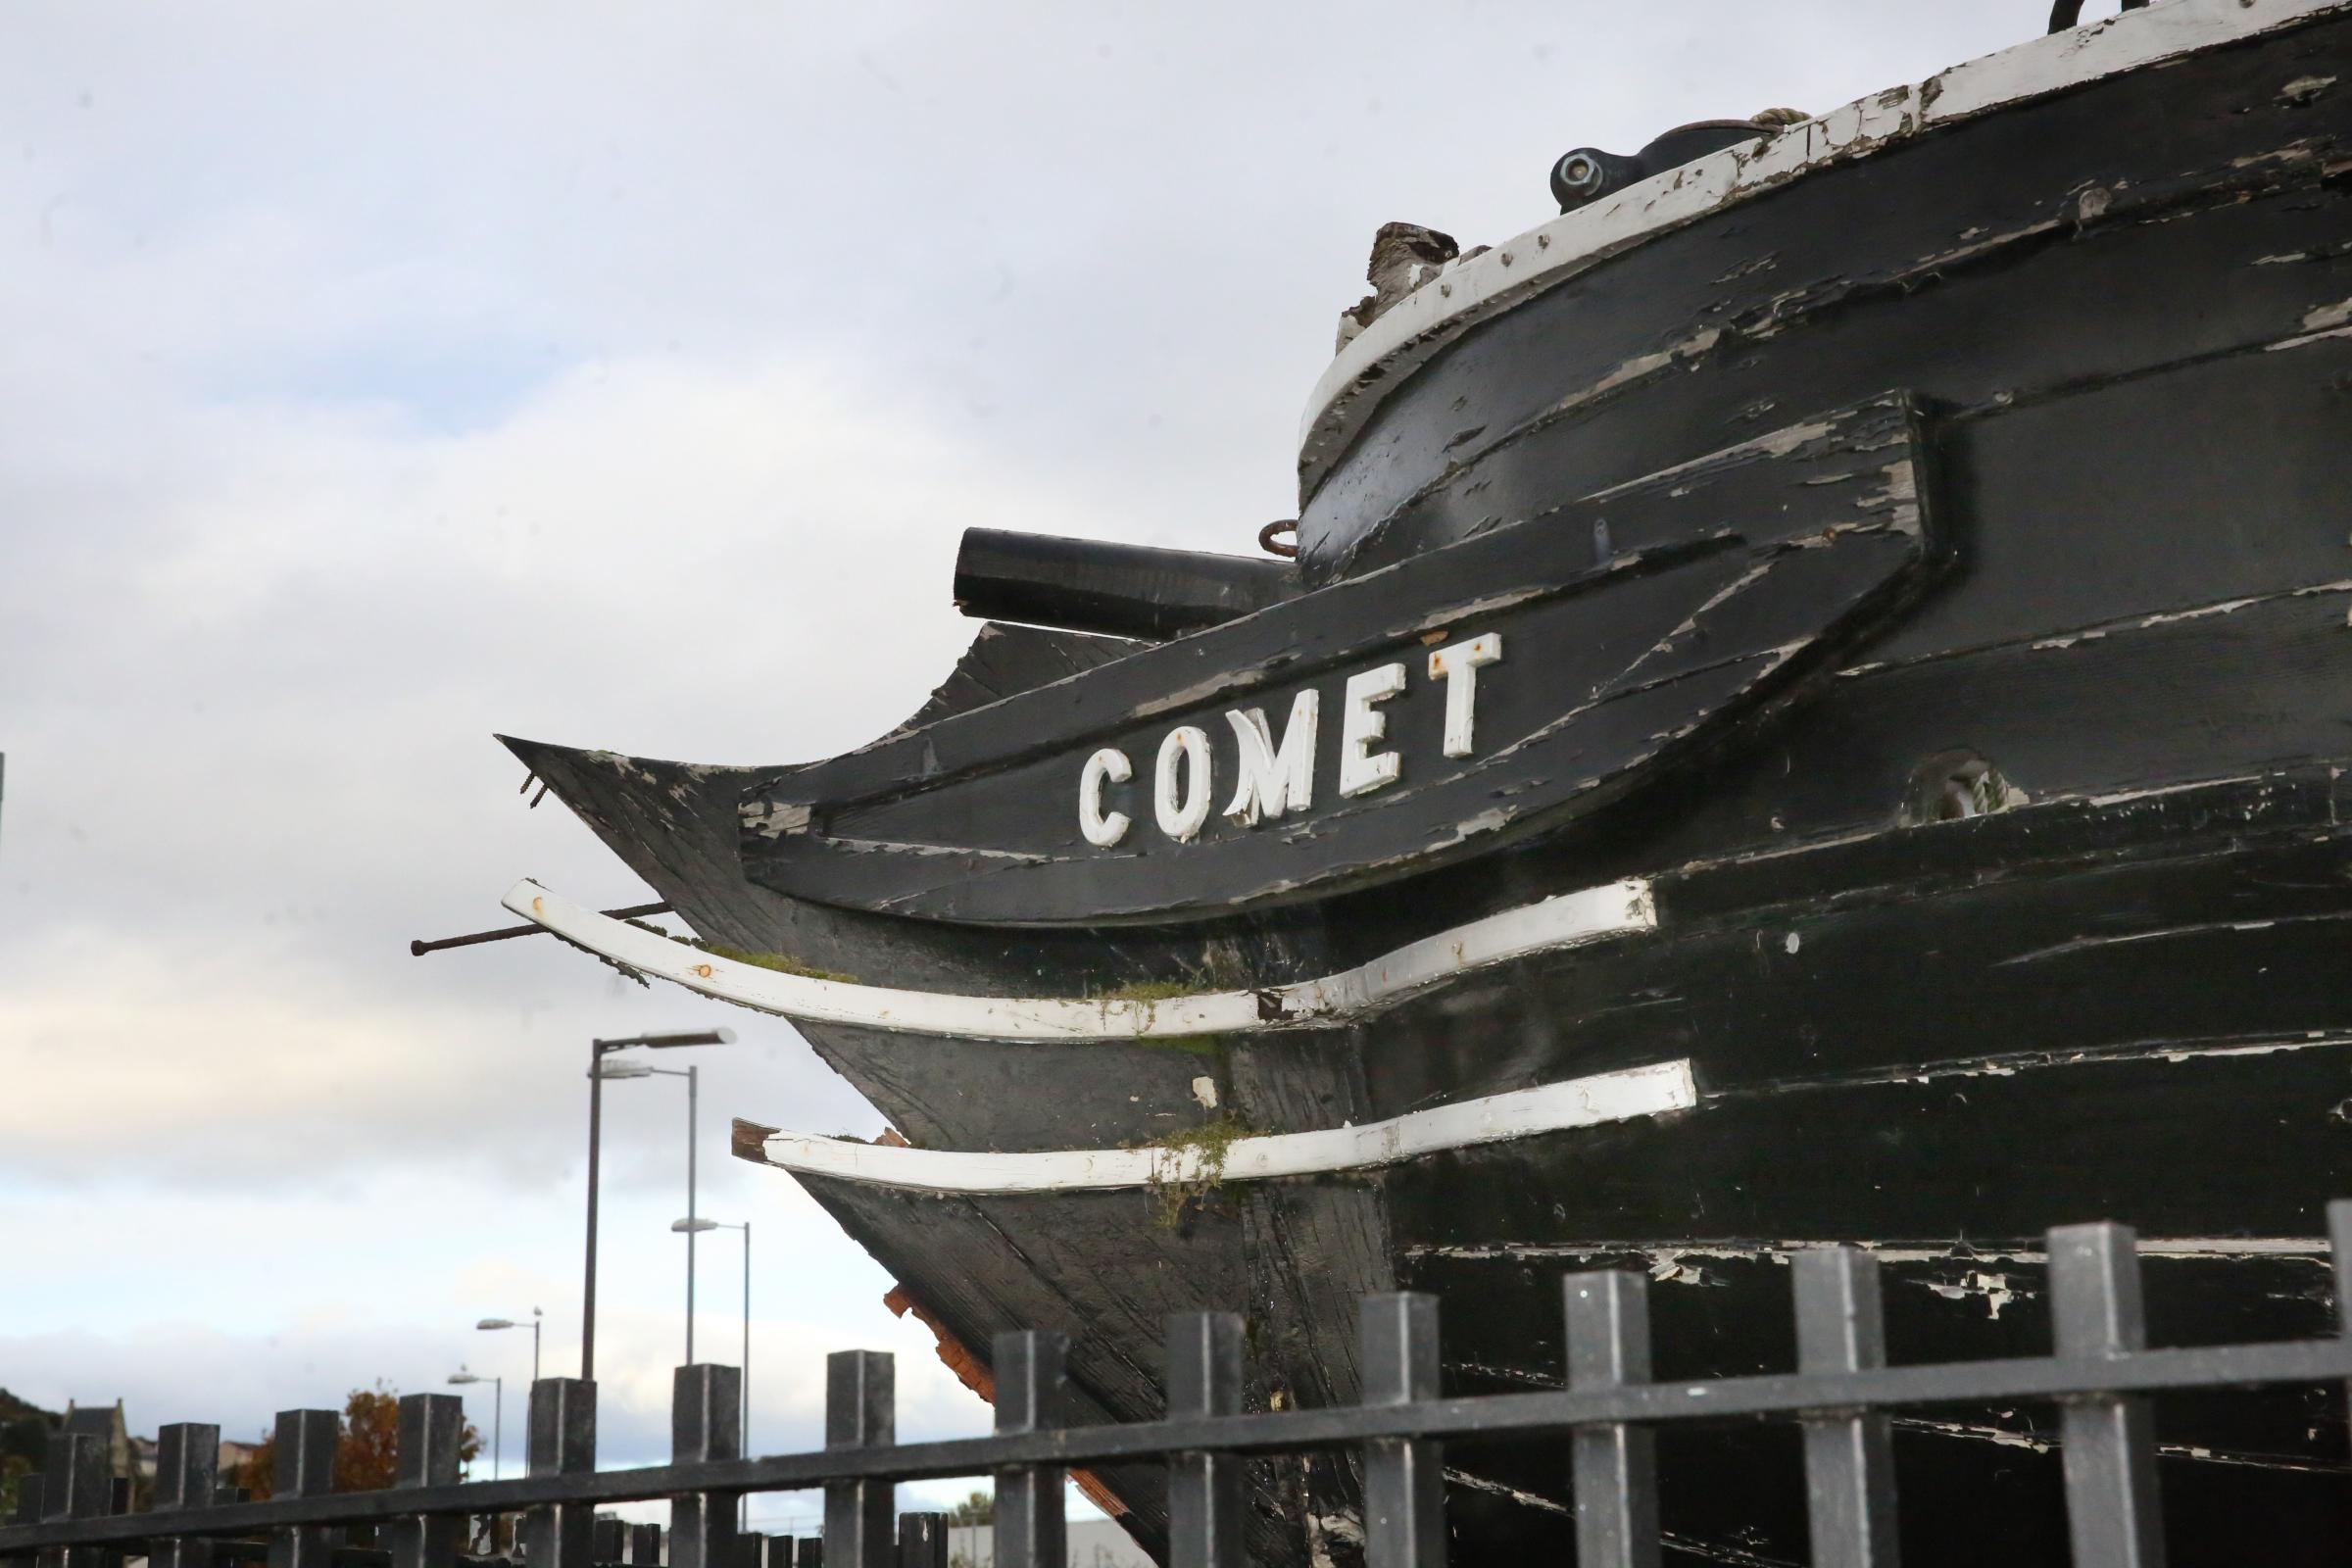 Comet Replica, Port Glasgow